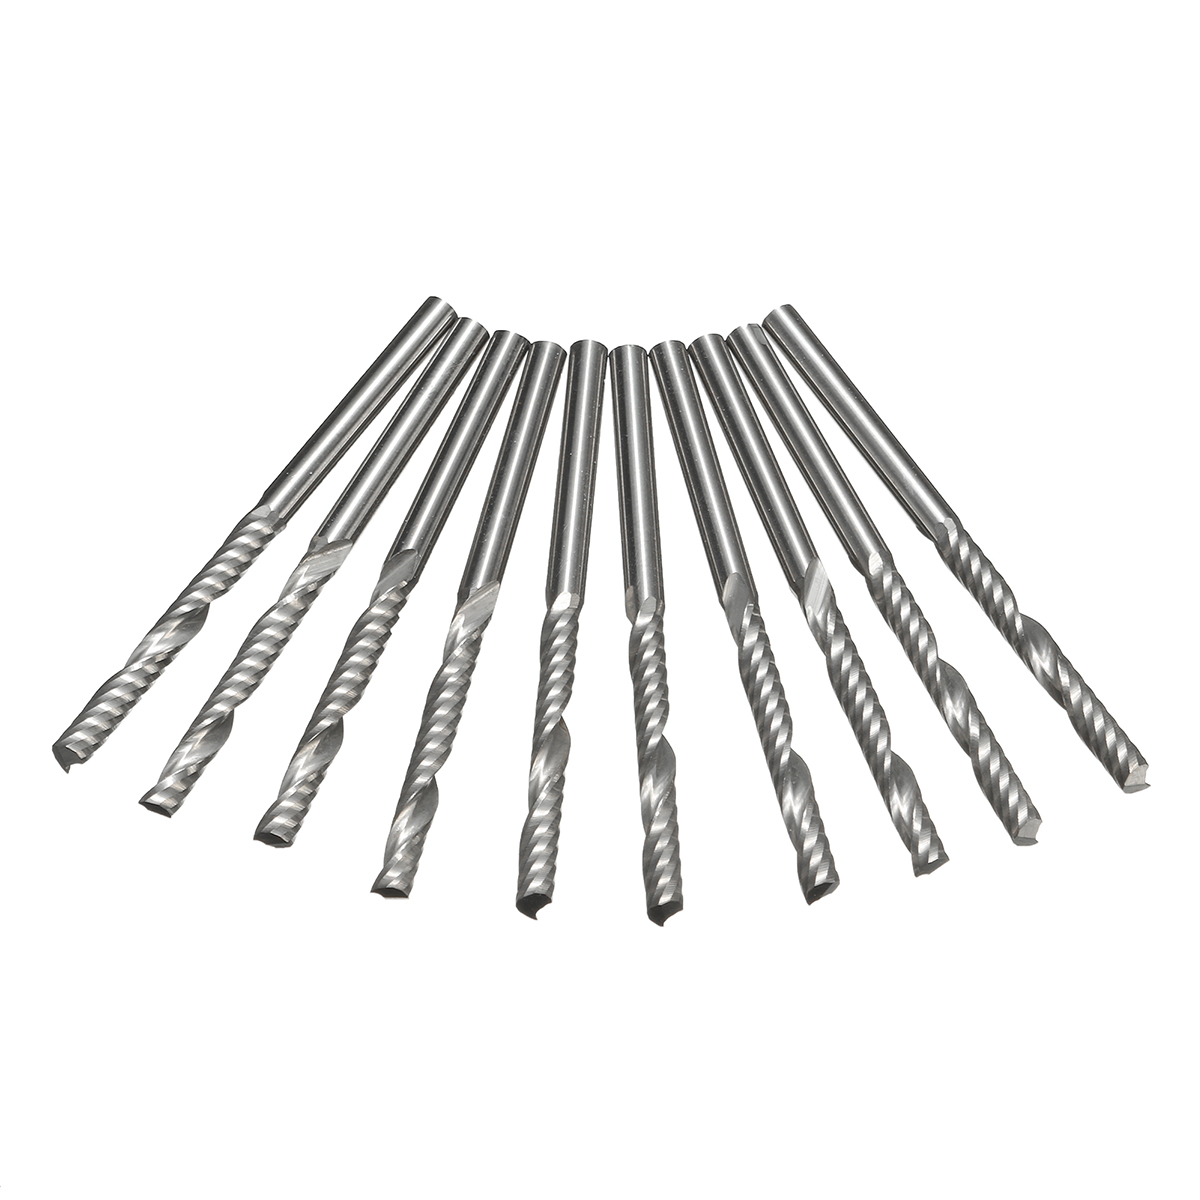 Drillpro-DB-M7-10pcs-18-Inch-Shank-End-Mill-Cutter-1-Flute-Carbide-Spiral-Milling-Cutter-1033261-5